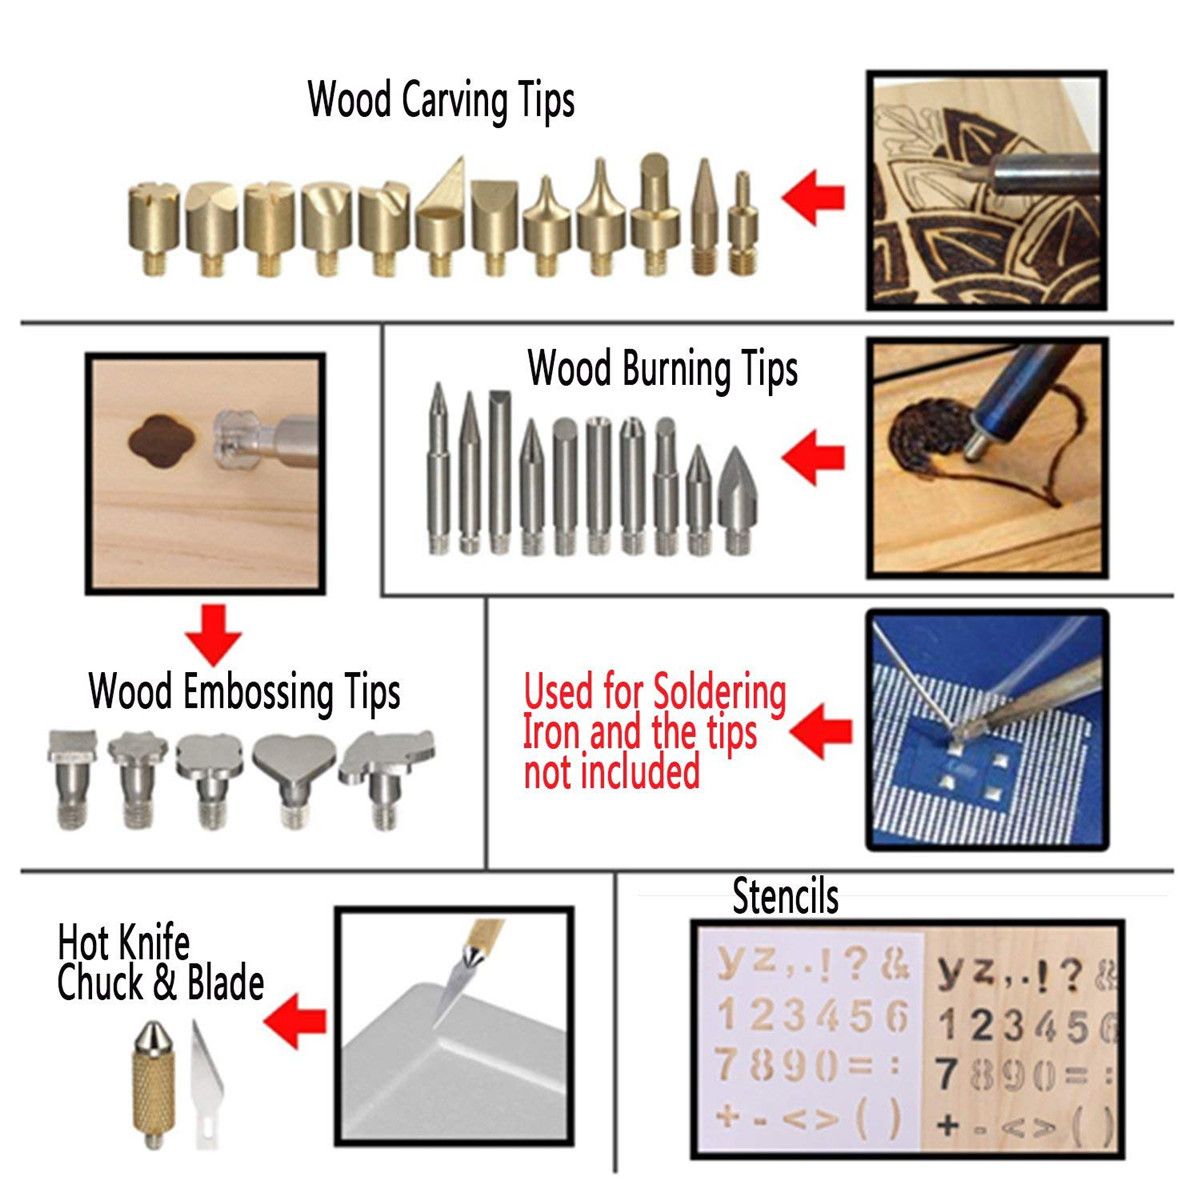 30Pcs-60W-Wood-Burning-Pen-Set-Electric-Soldering-Iron-Kit-Iron-Burner-Craft-Tool-Soldering-Tools-Ki-1606041